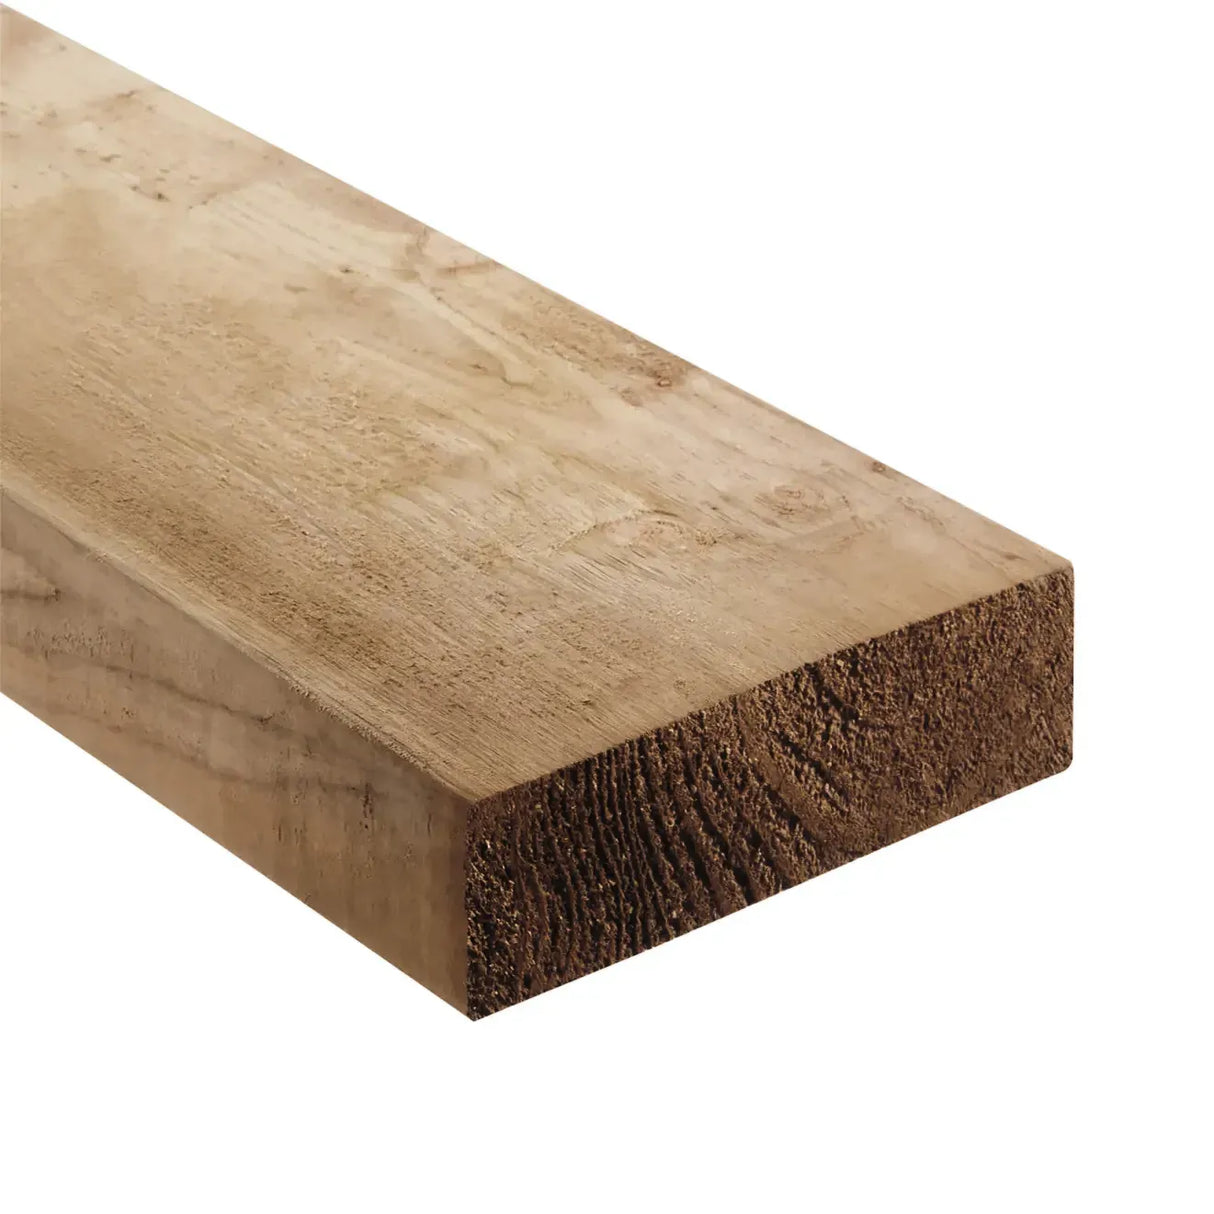 6x2 Treated Timber C24 Regularised Sawn Joist 47x150mm - 4.2m